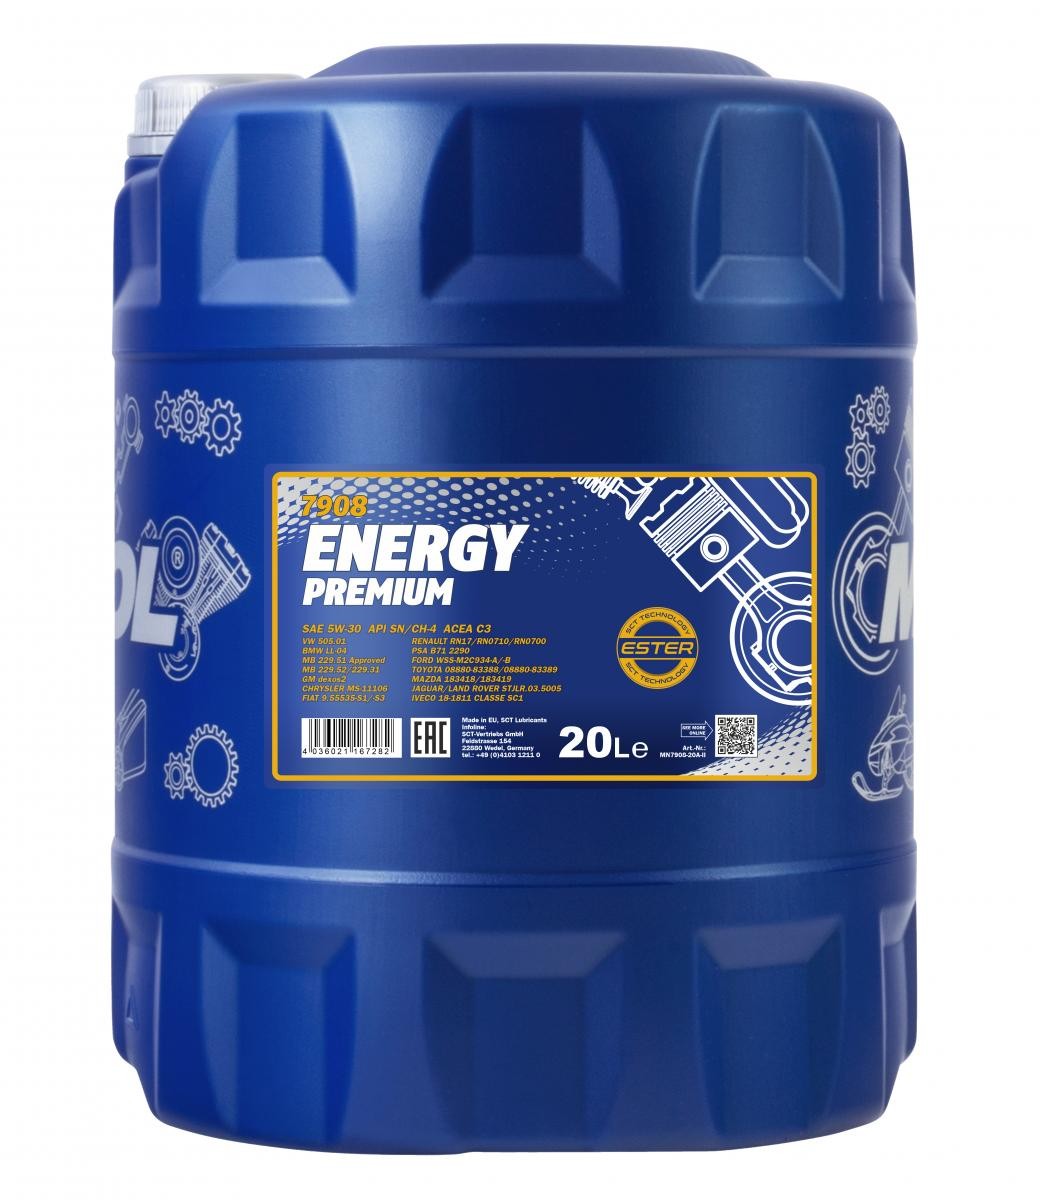 MN7908-20 MANNOL ENERGY PREMIUM 5W-30, 20l, Synthetiköl Motoröl MN7908-20 günstig kaufen